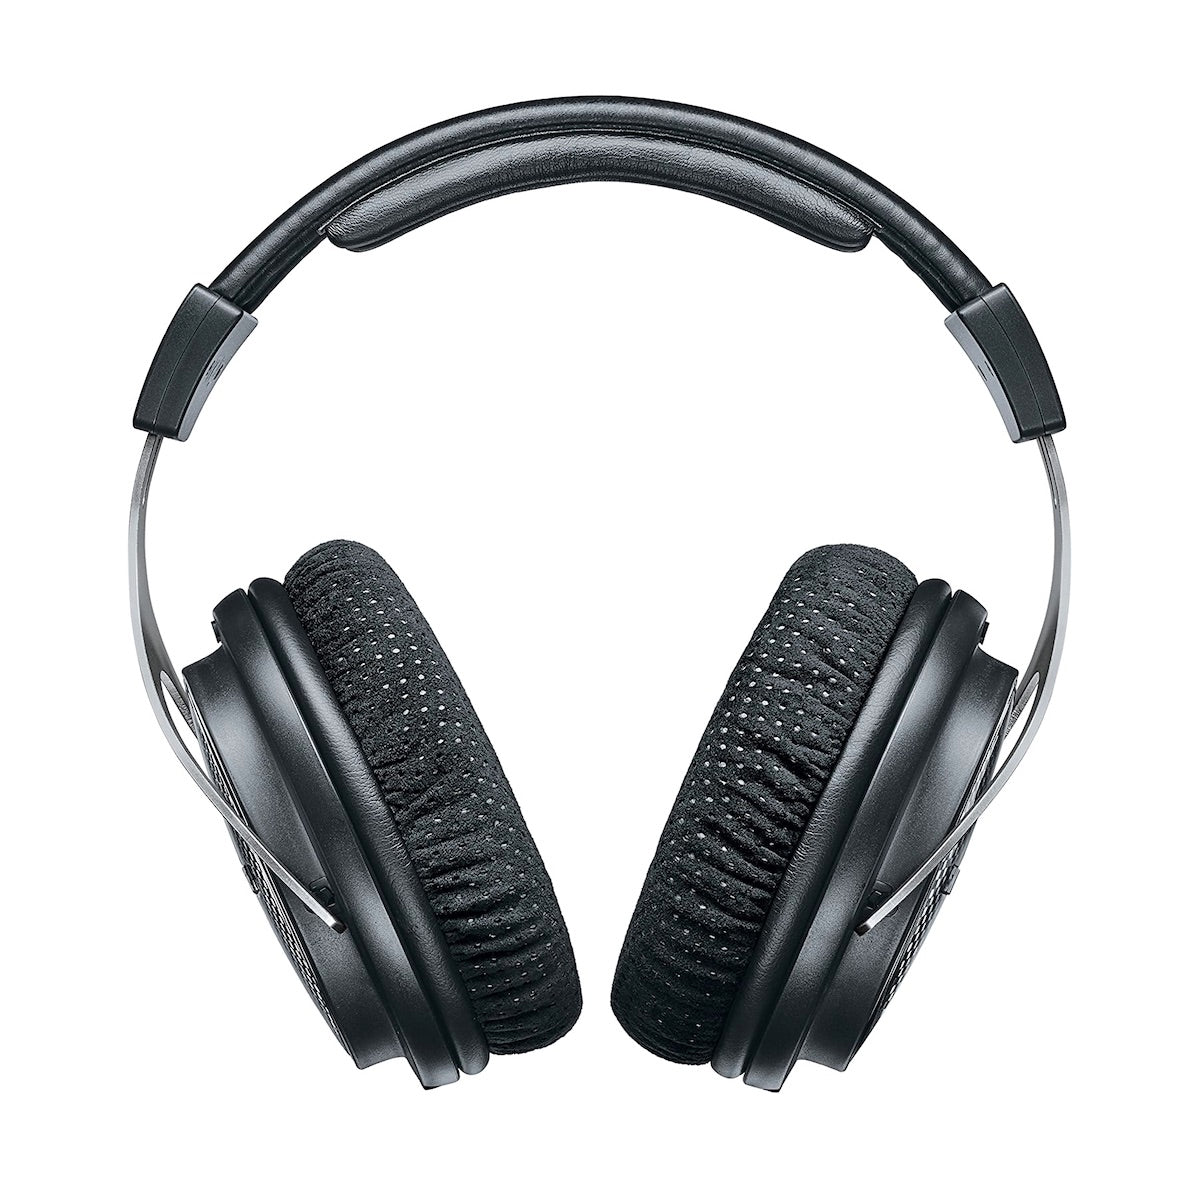 Shure SRH1540 - Premium Closed-Back Headphones, front